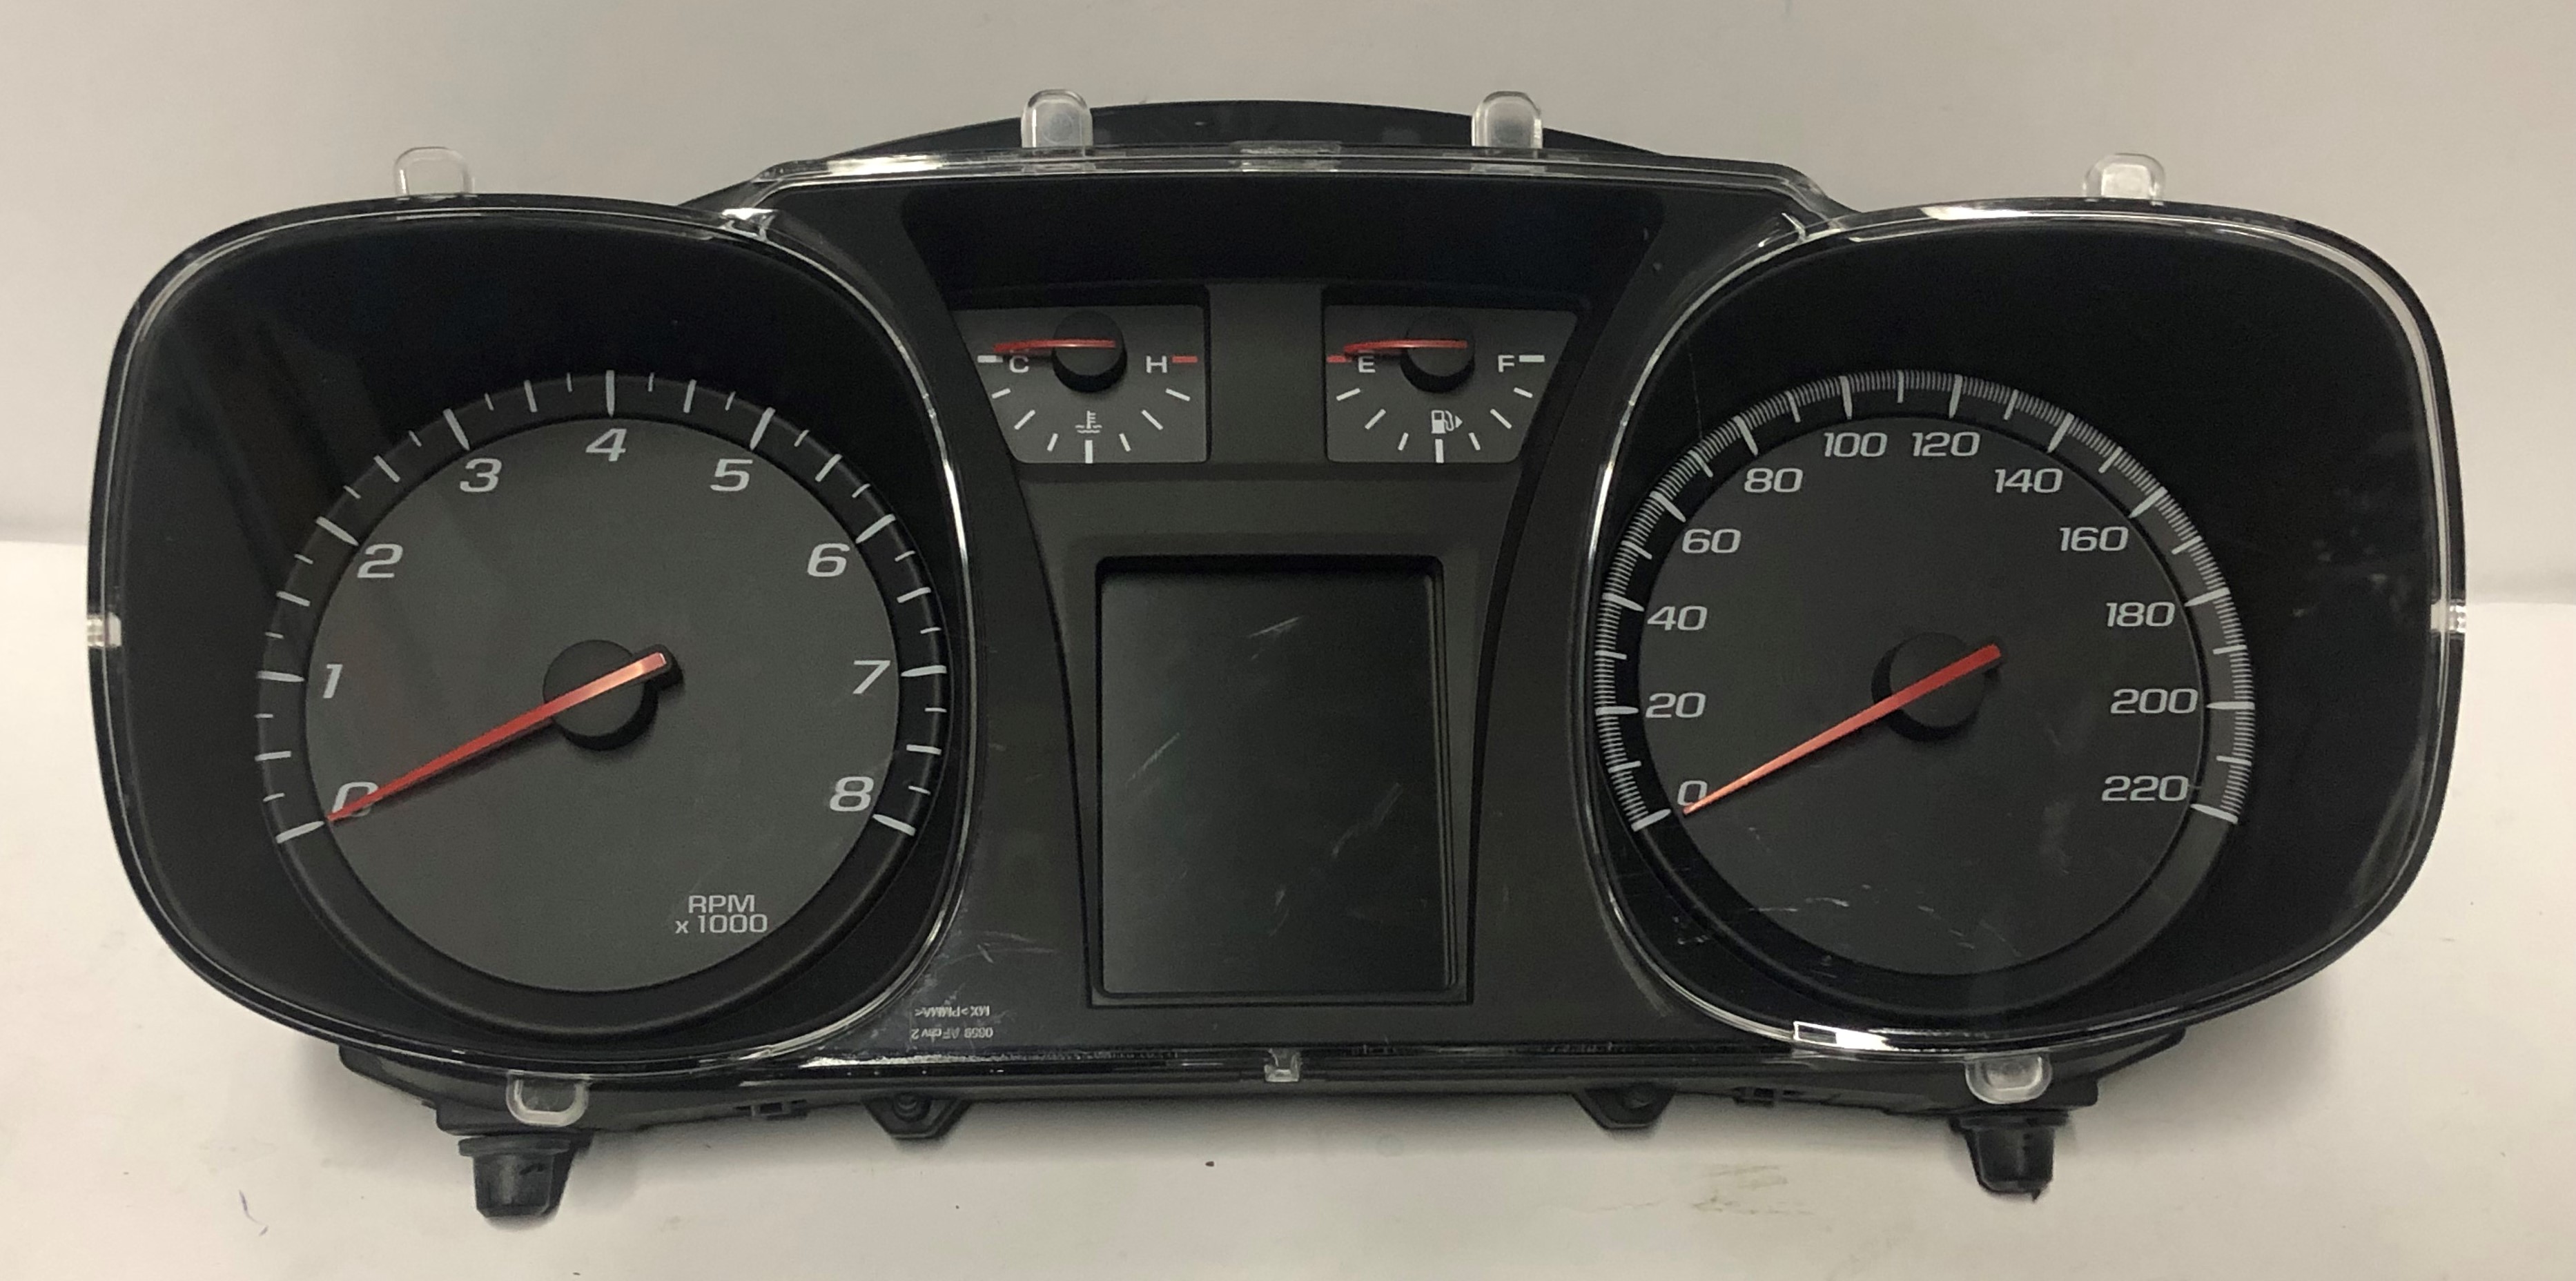 2006 Buick Lacrosse Instrument Cluster Not Working - Seanallop 2016 Chevy Equinox Digital Speedometer Not Working